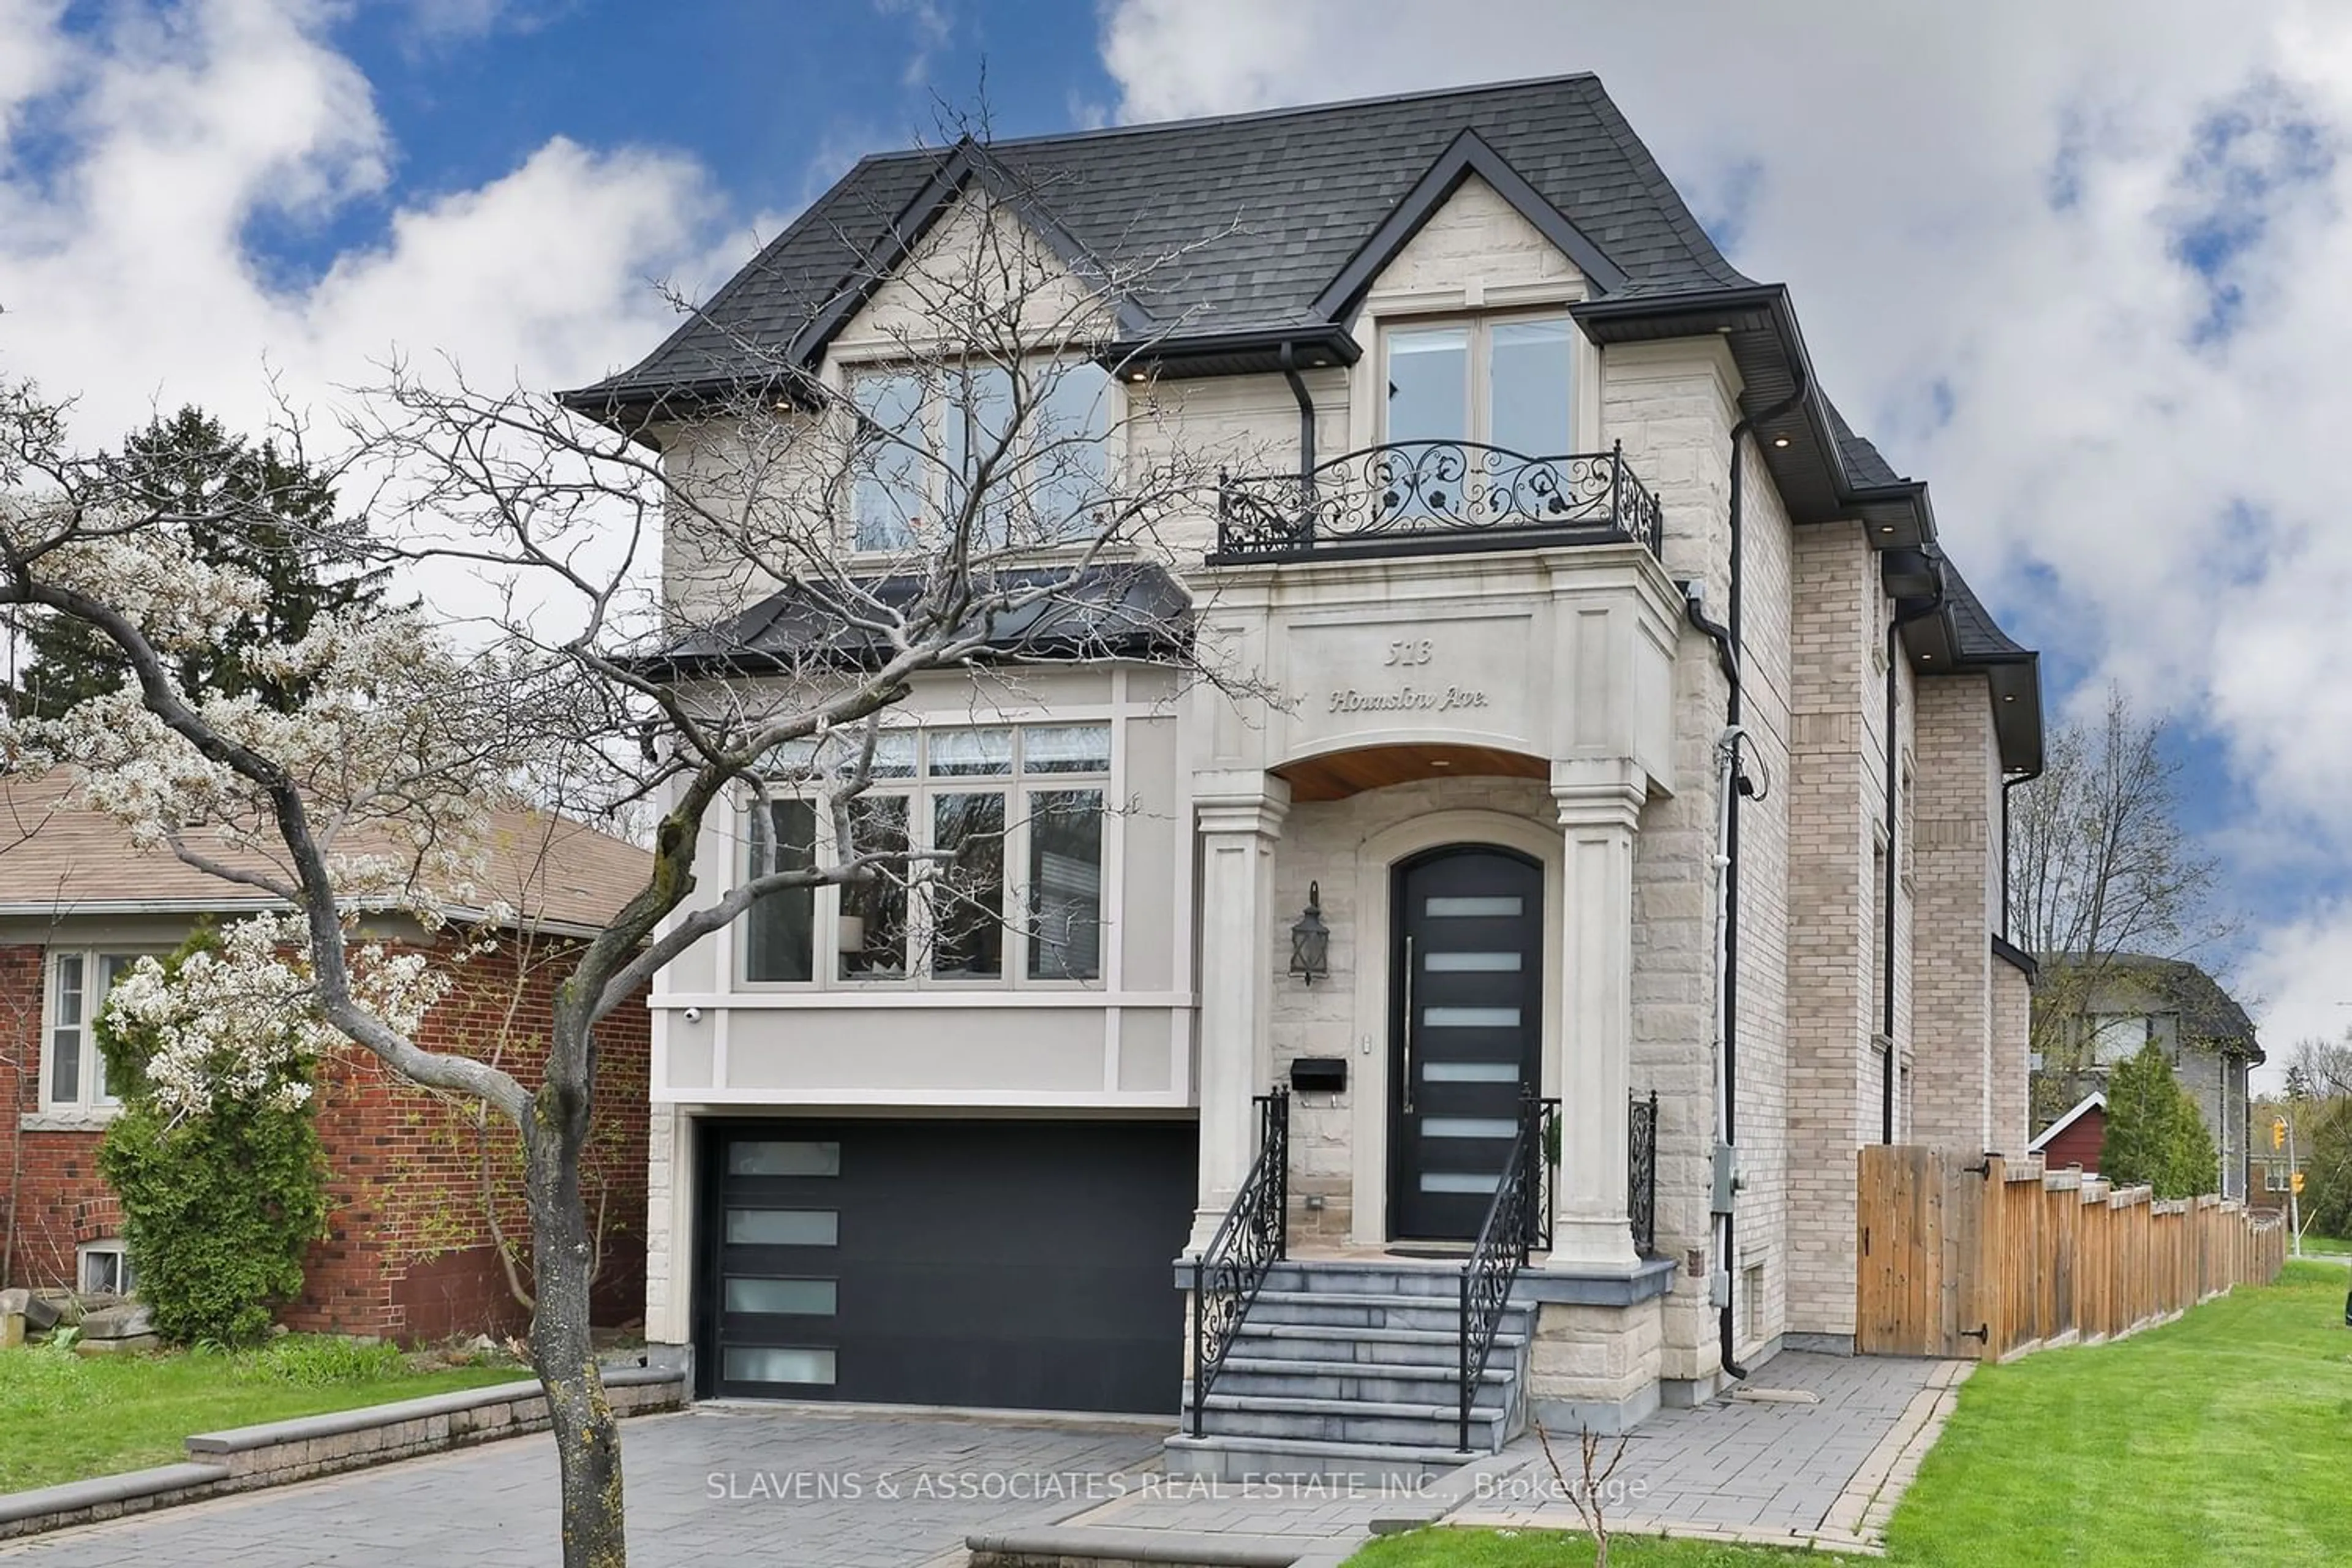 Home with brick exterior material for 513 Hounslow Ave, Toronto Ontario M2R 1J1